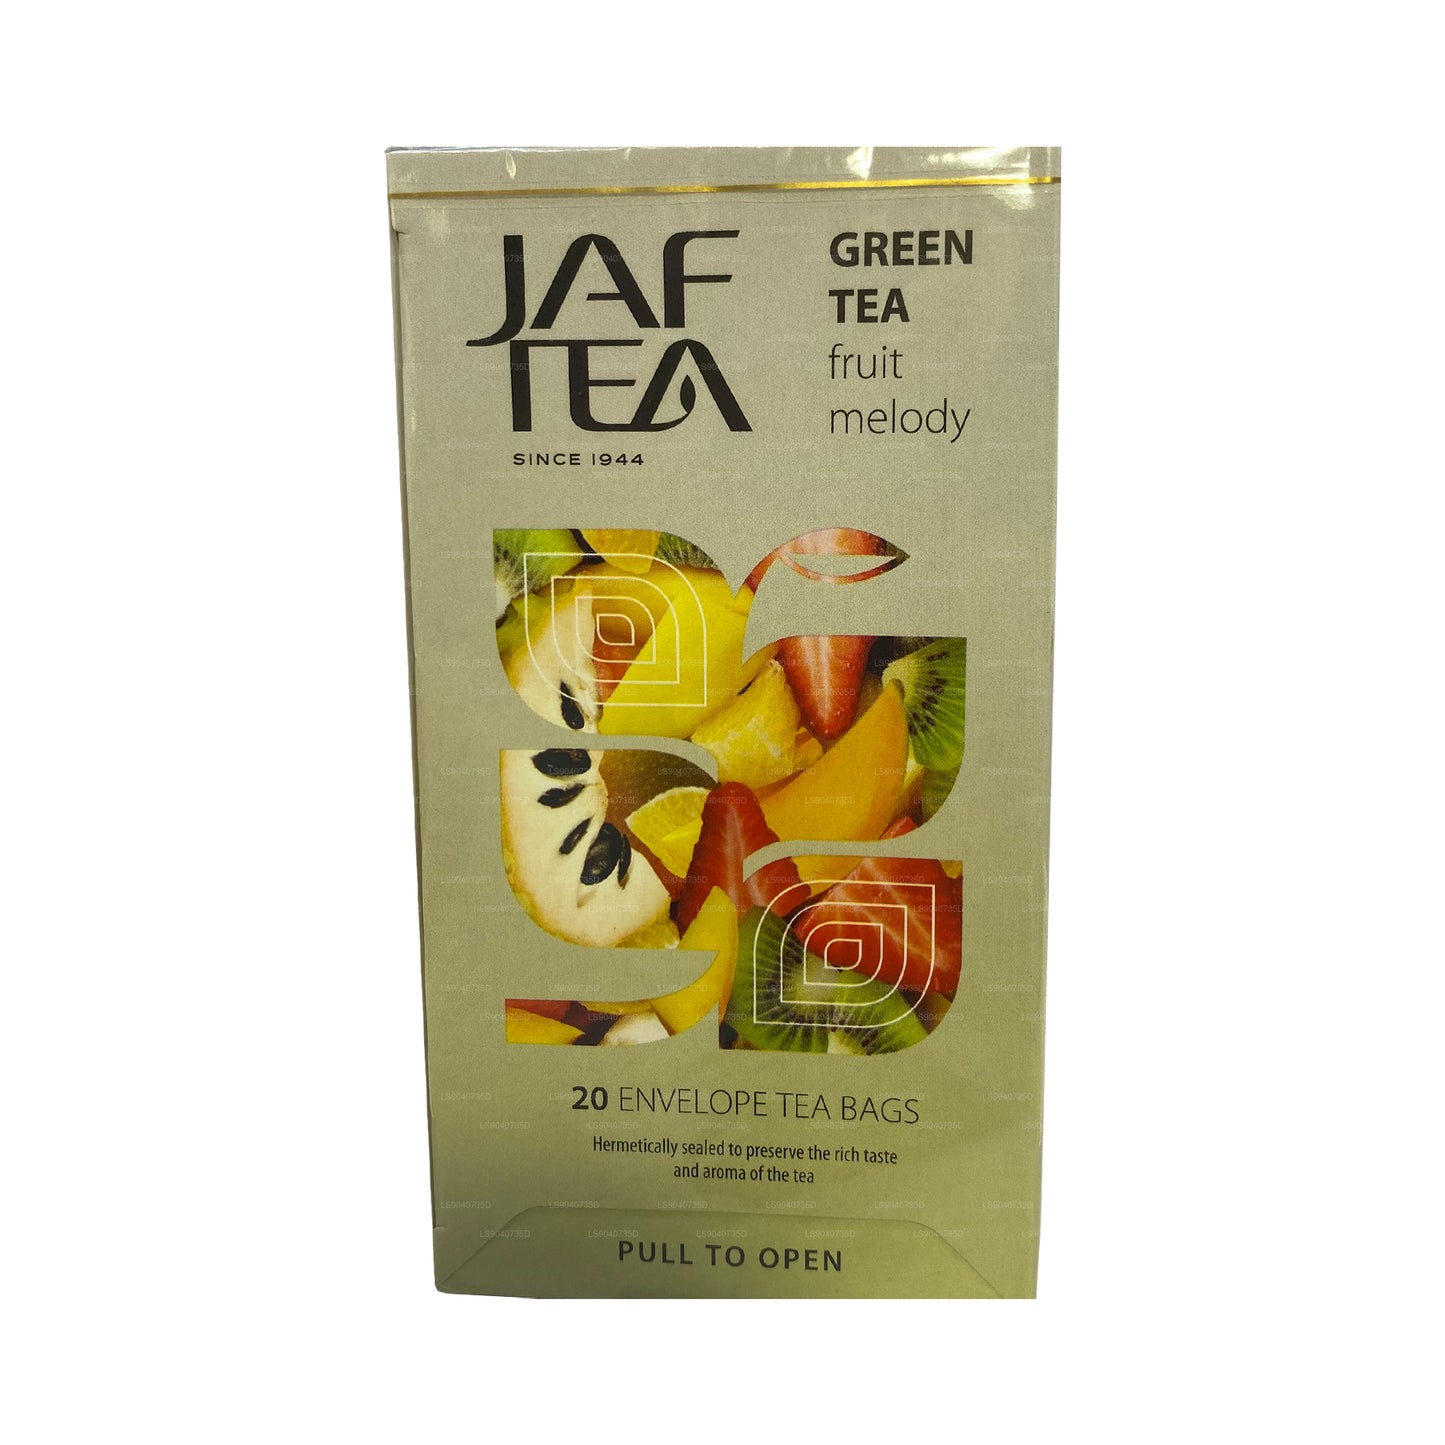 Jaf Tea Pure Green 系列绿茶水果旋律 (40g) 20 个茶包